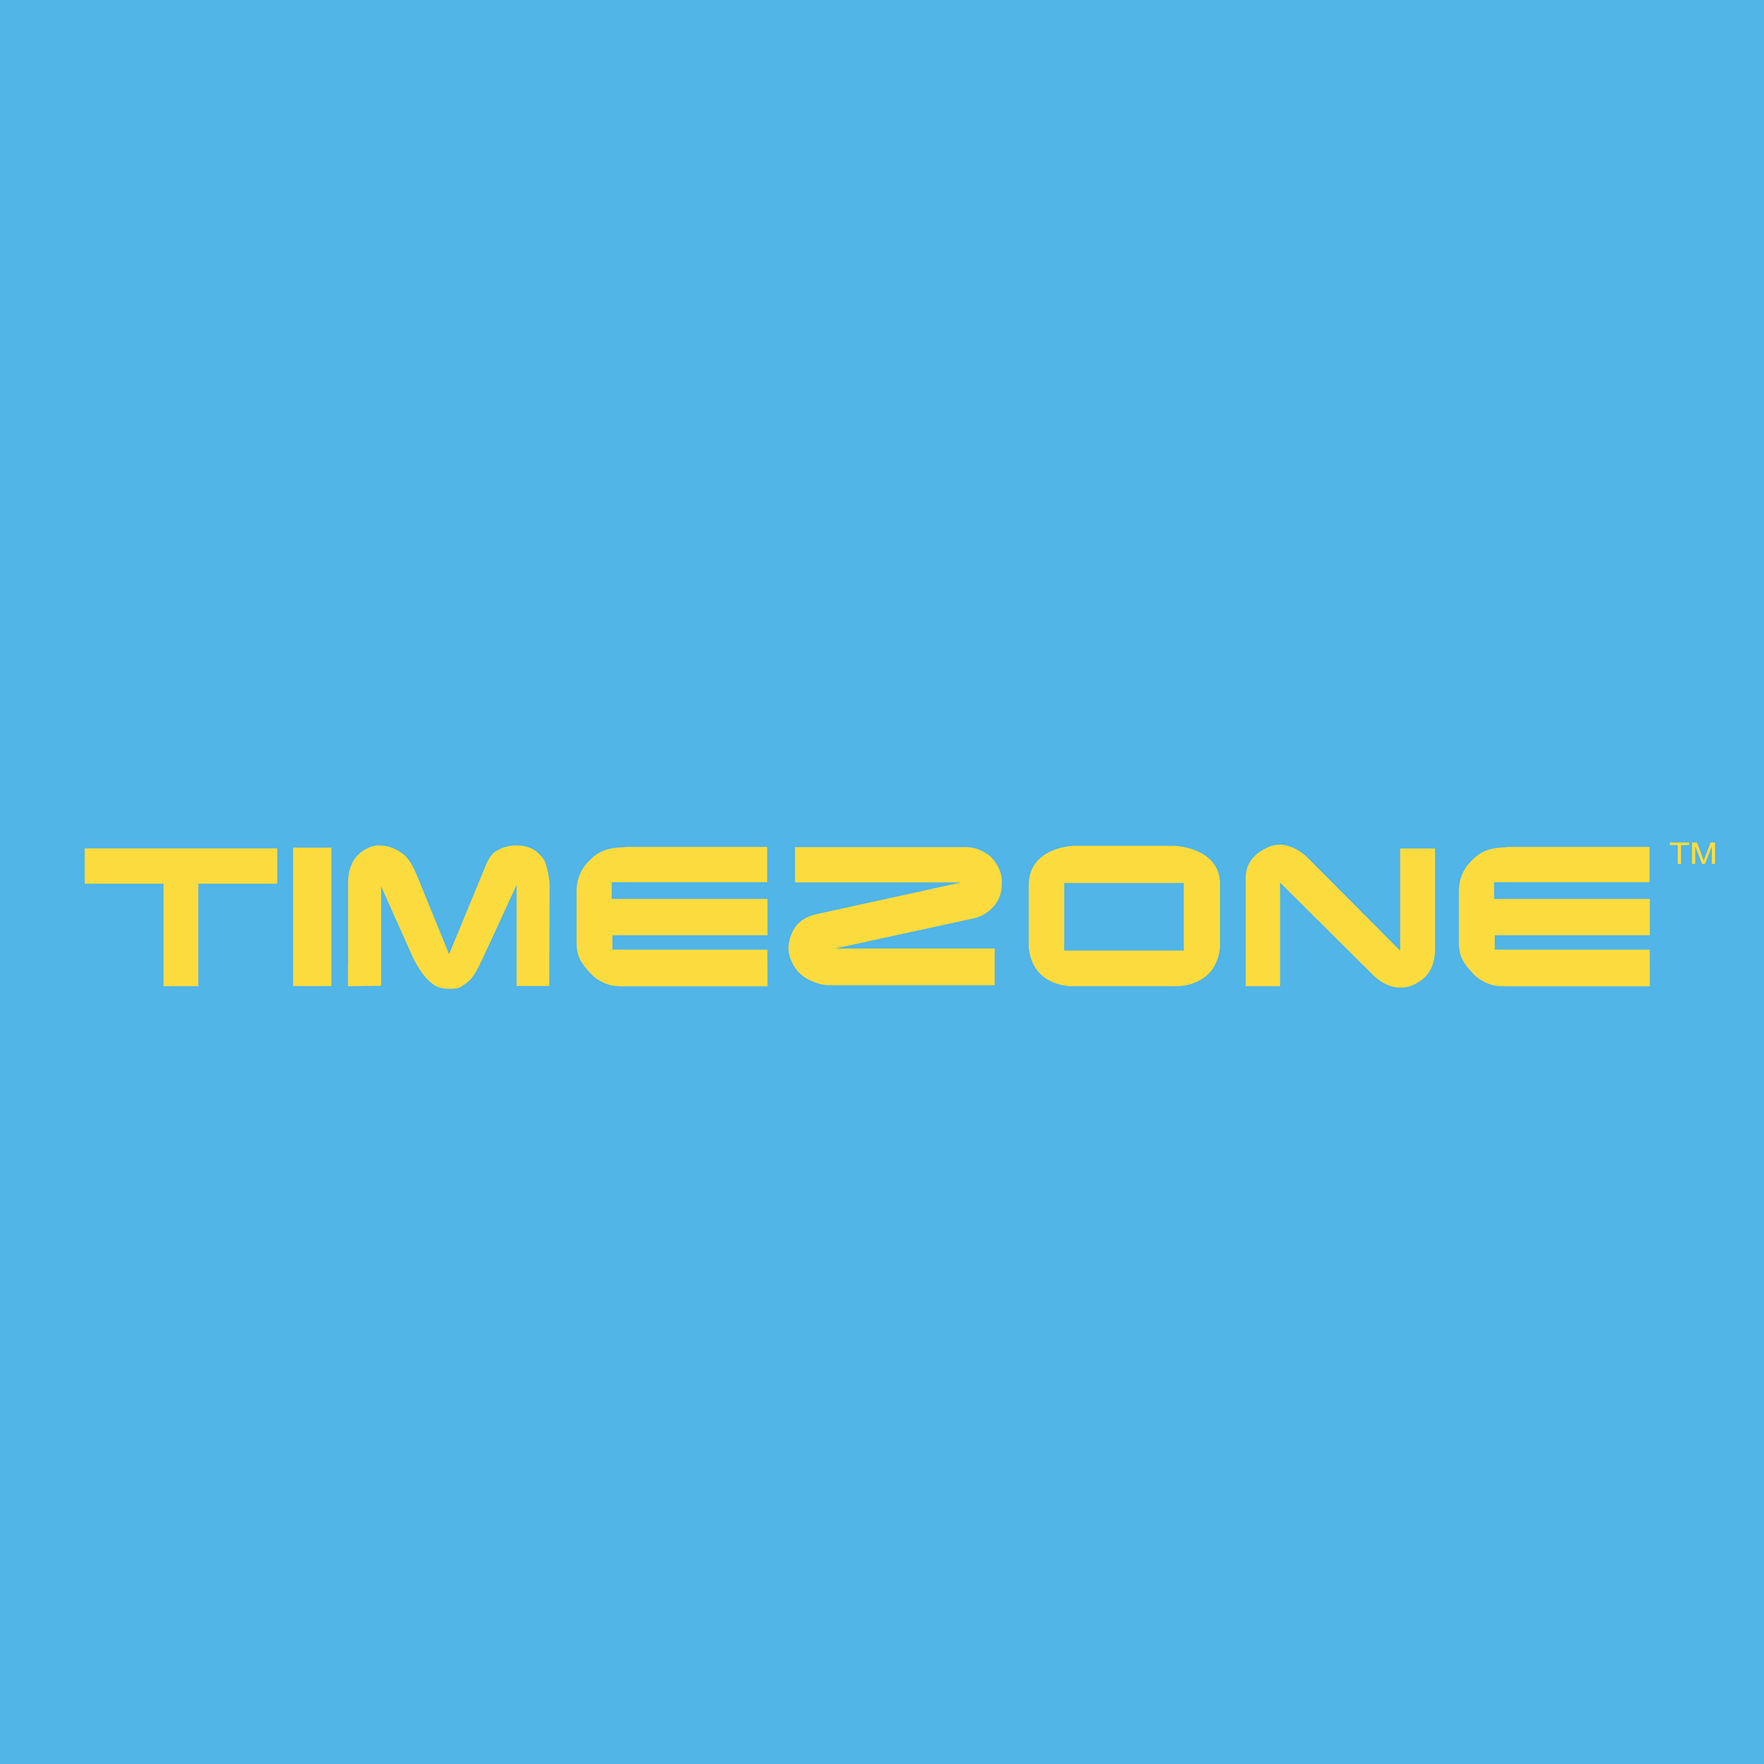 Timezone (Causeway Point) - Dine, Shop, Earn